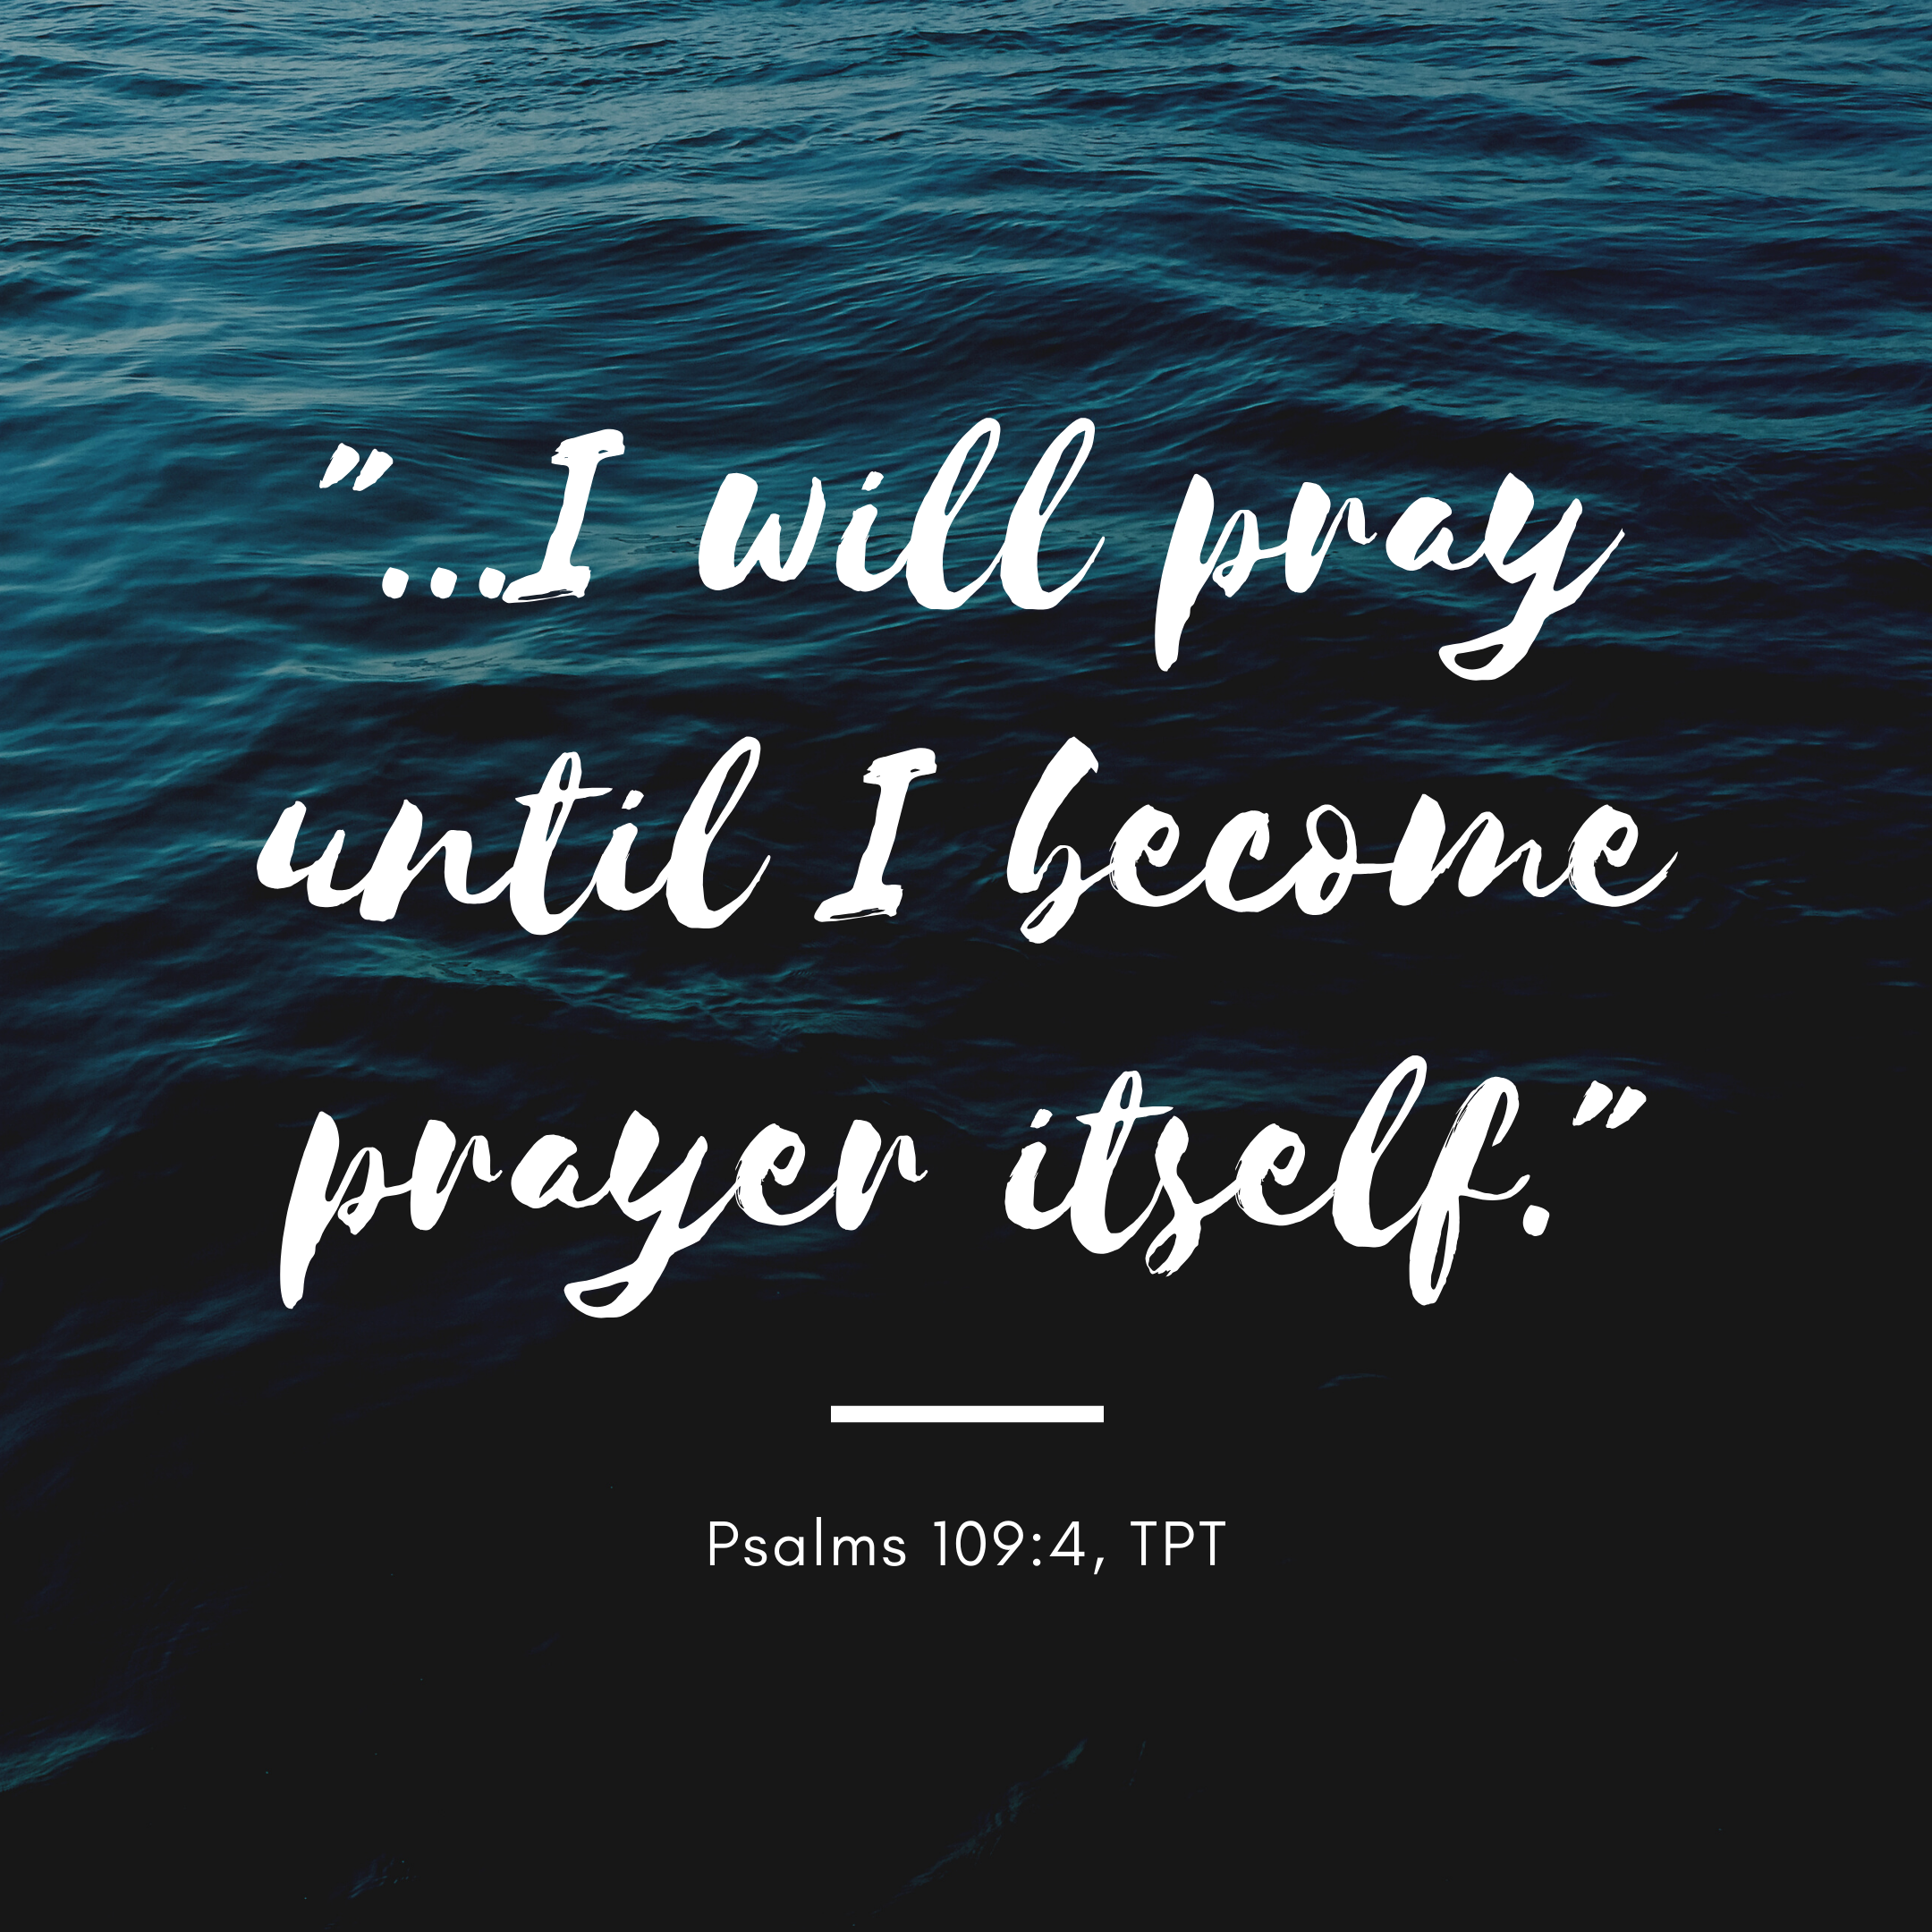 I will pray until I become prayer itself.” – slidehunter